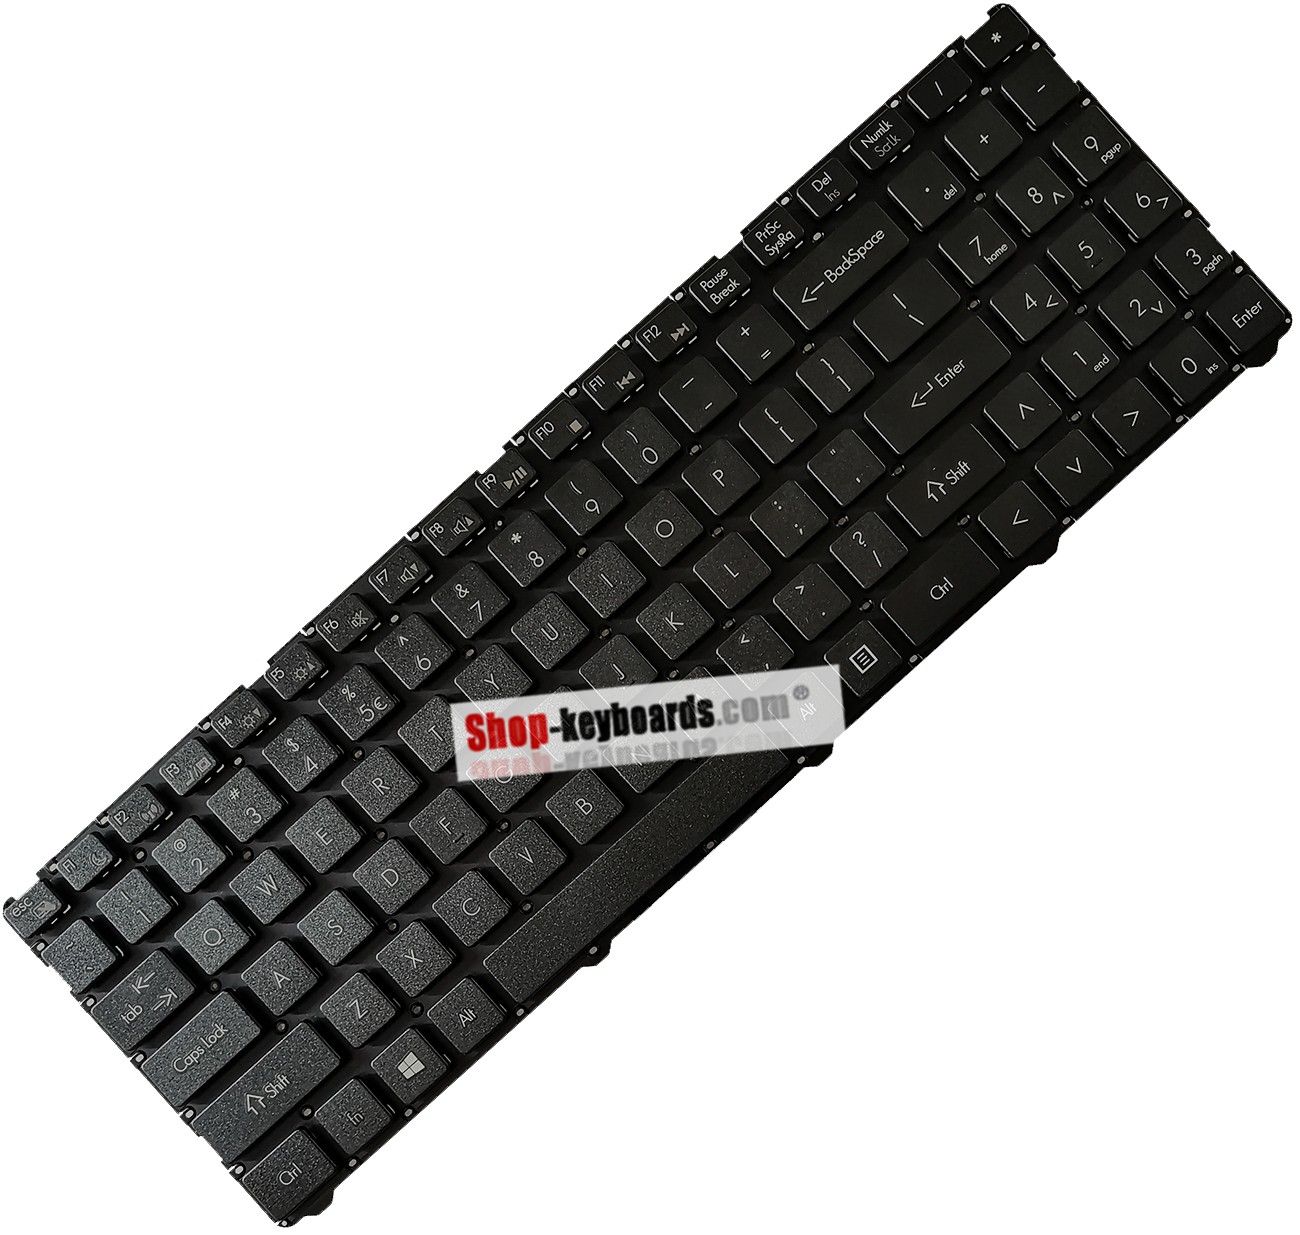 LG 15UD470-GX5SE Keyboard replacement